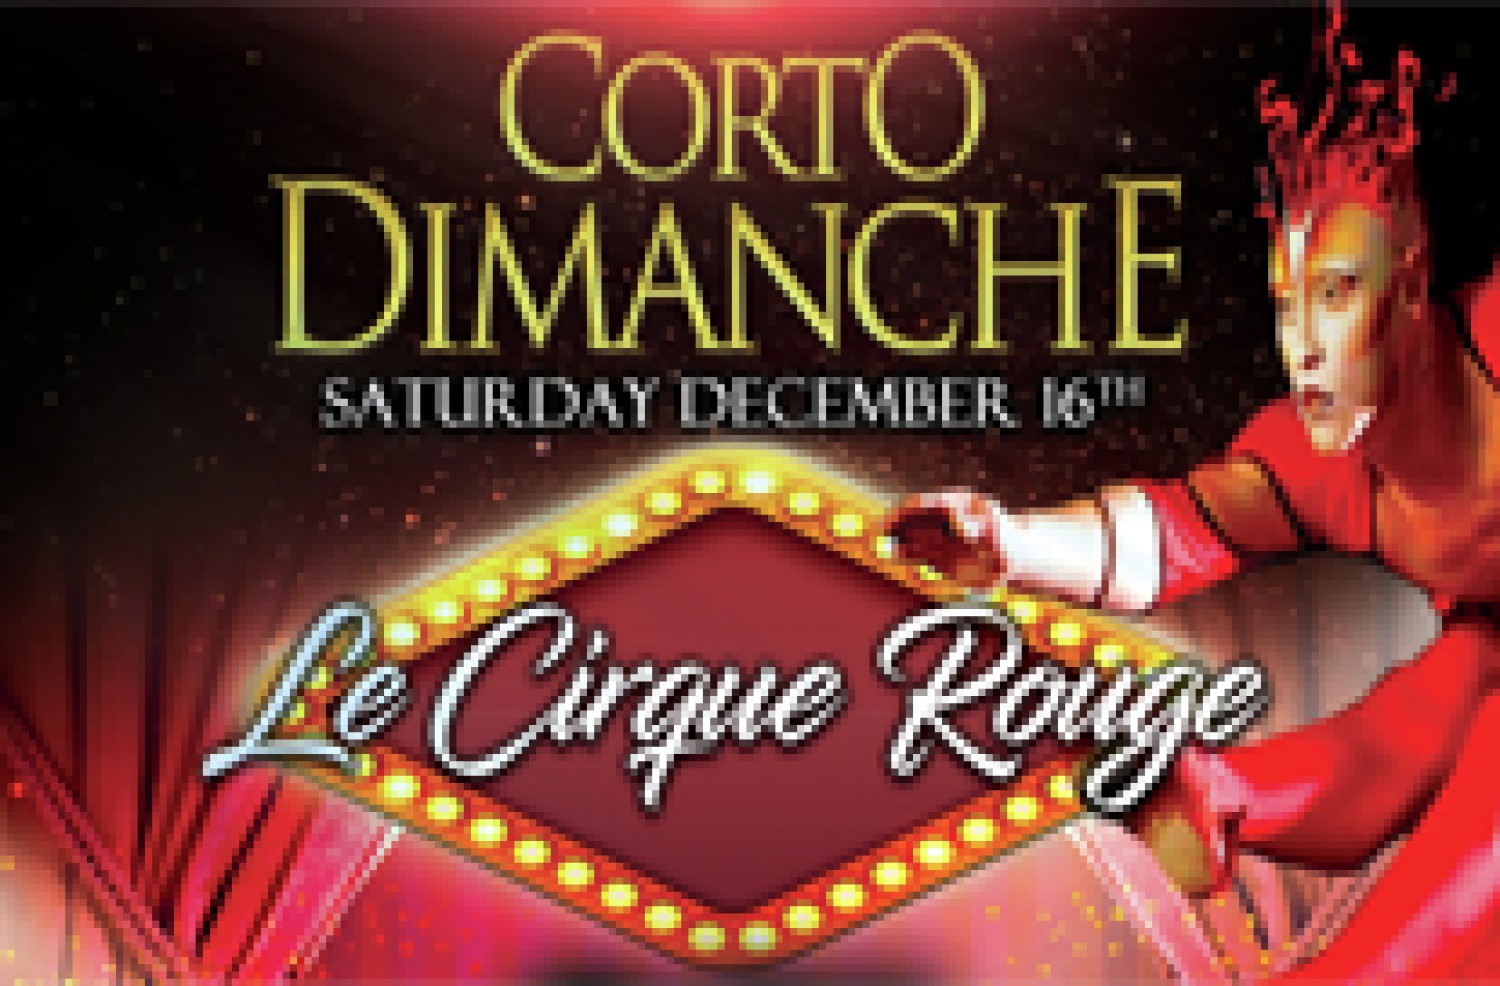 Party nieuws: Timetable voor Corto Dimanche 'Le Cirque Rouge' bekend!